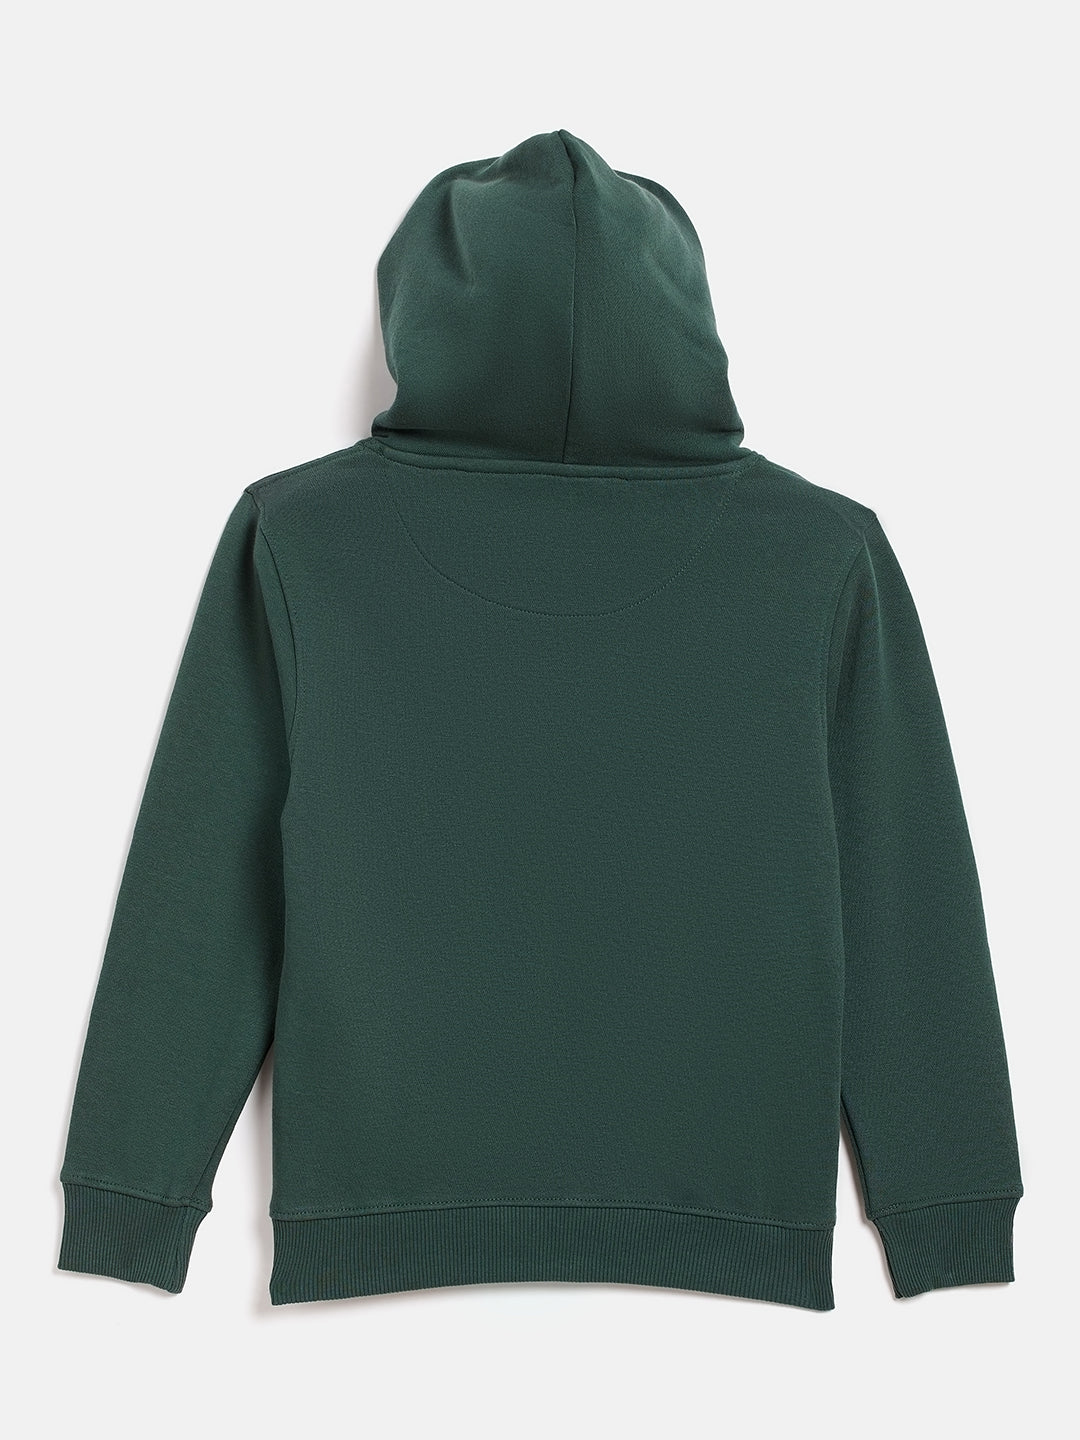 Green Printed Hooded Sweatshirt - Girls Sweatshirts